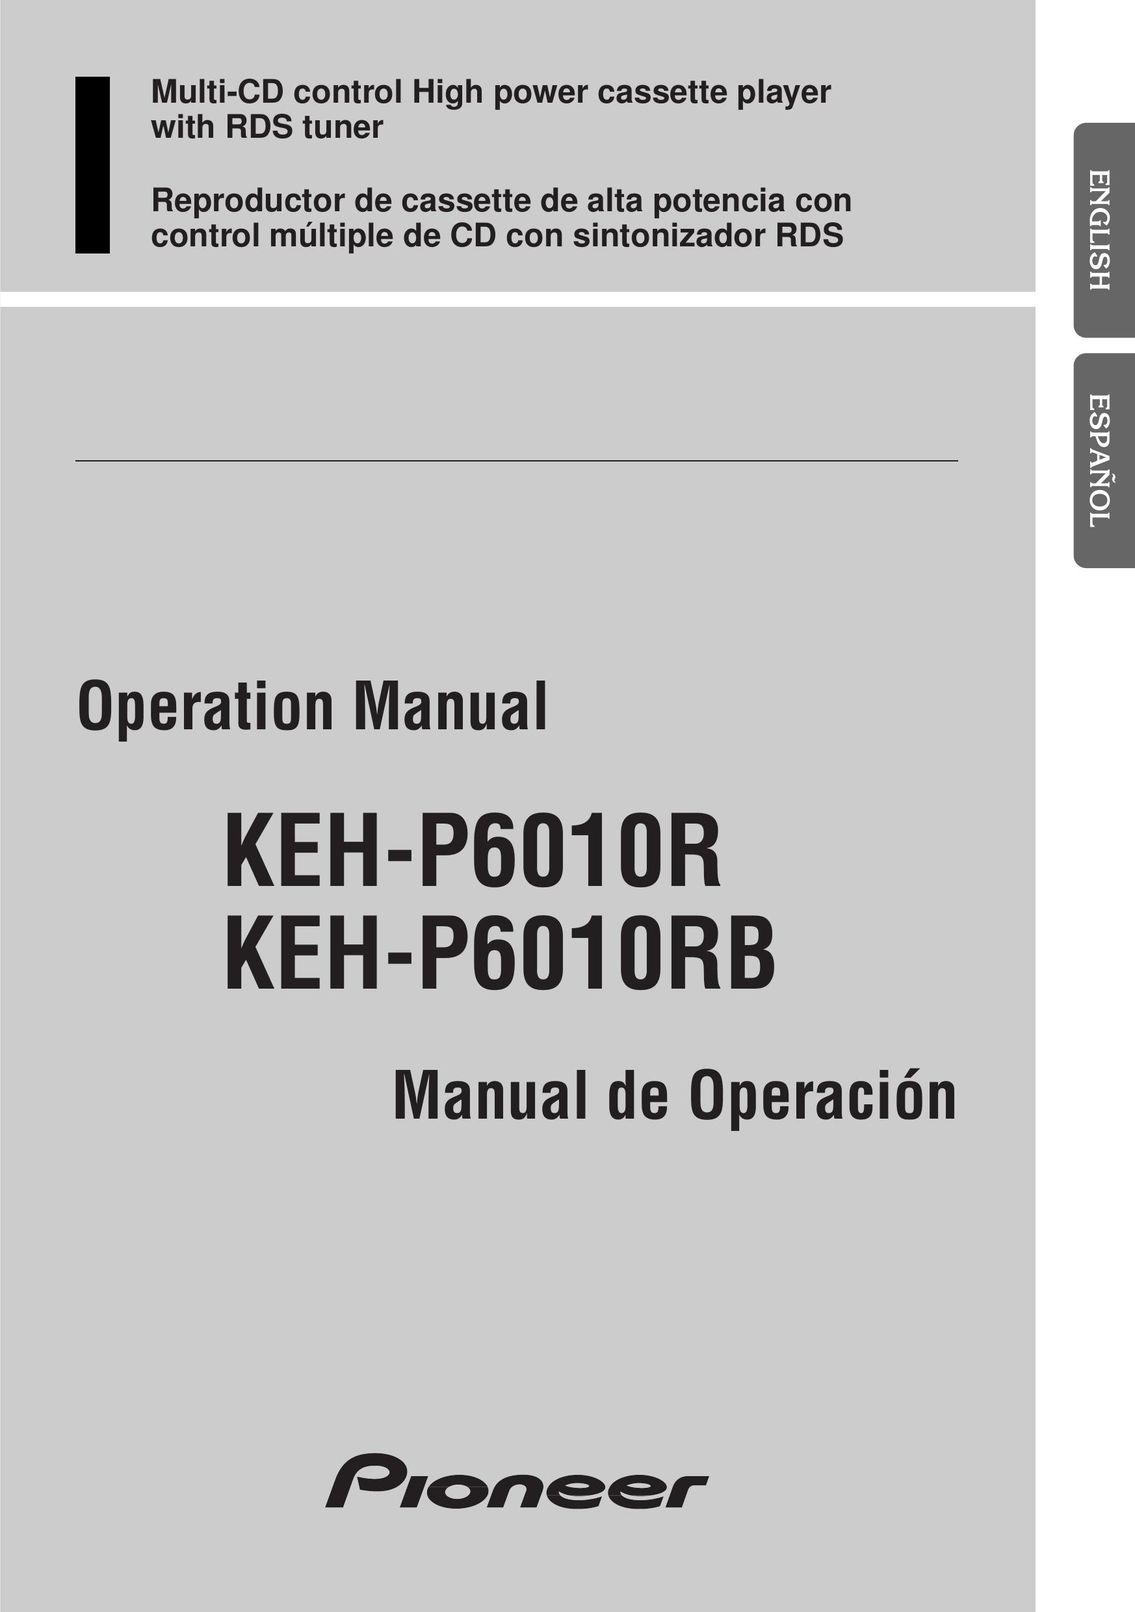 Pioneer KEH-P6010RB Cassette Player User Manual